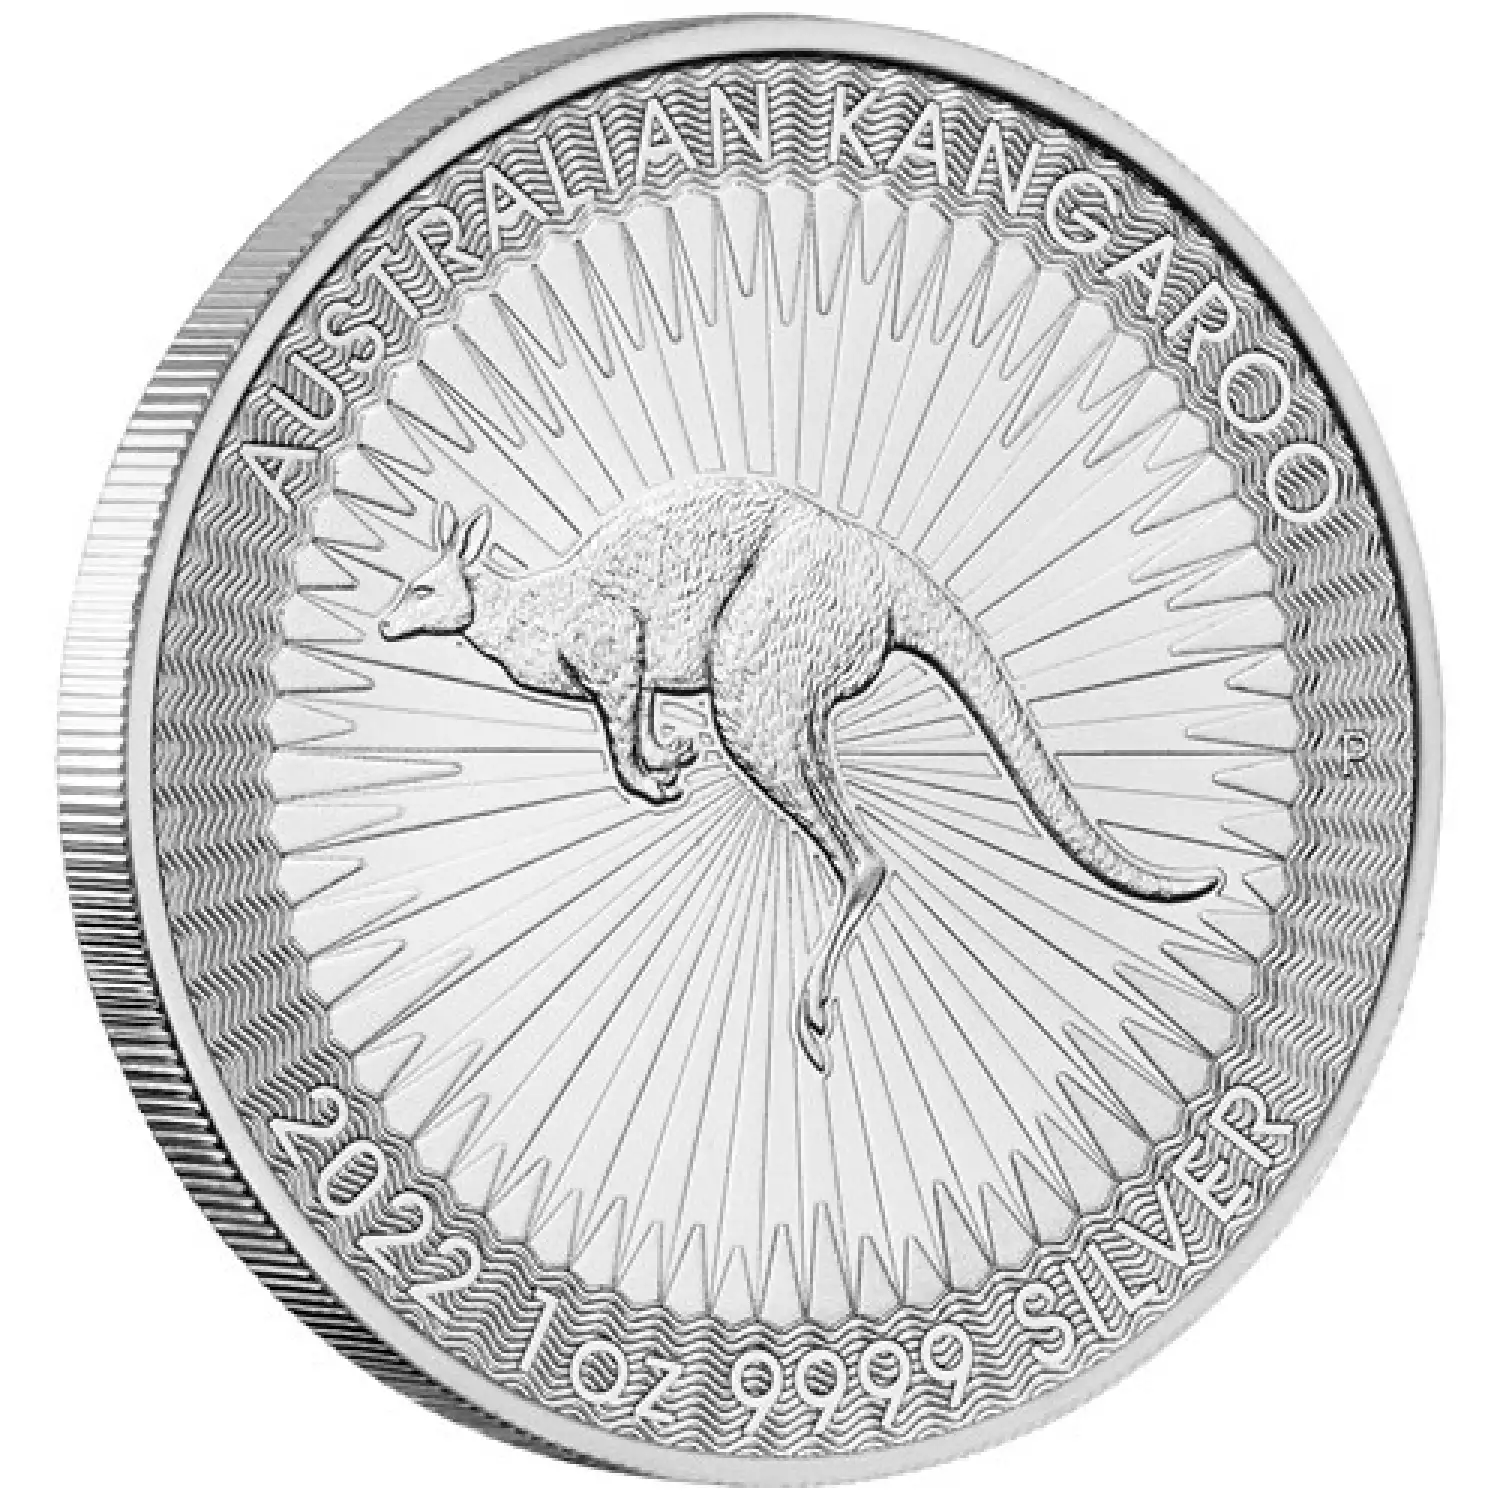 2022 1oz Australian Perth Mint Silver Kangaroo (3)